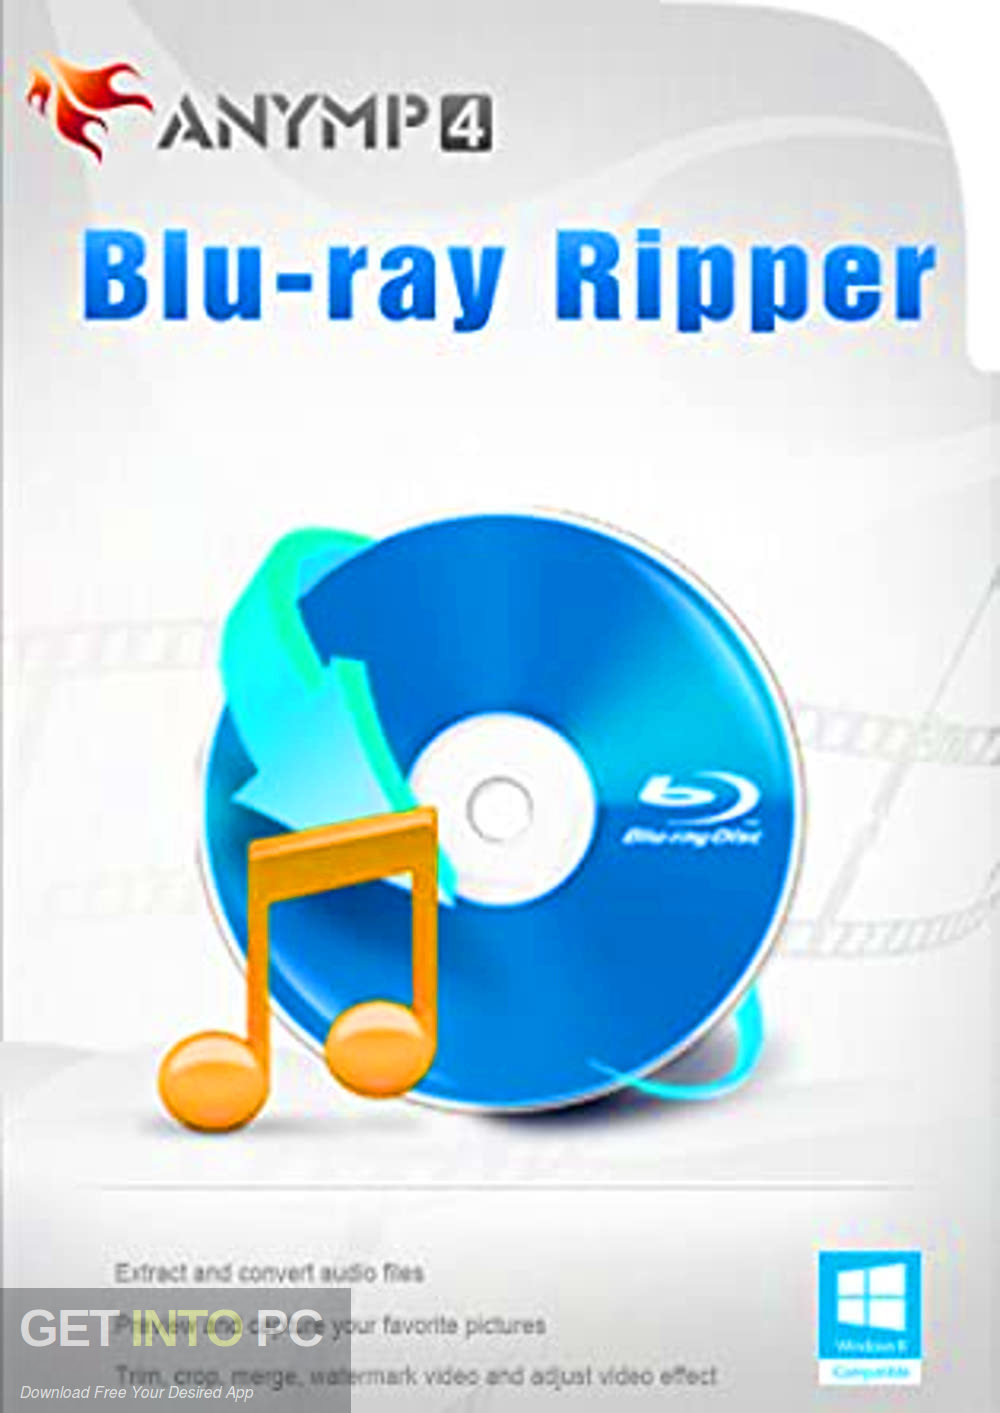 AnyMP4 Blu ray Ripper Free Download GetintoPC.com